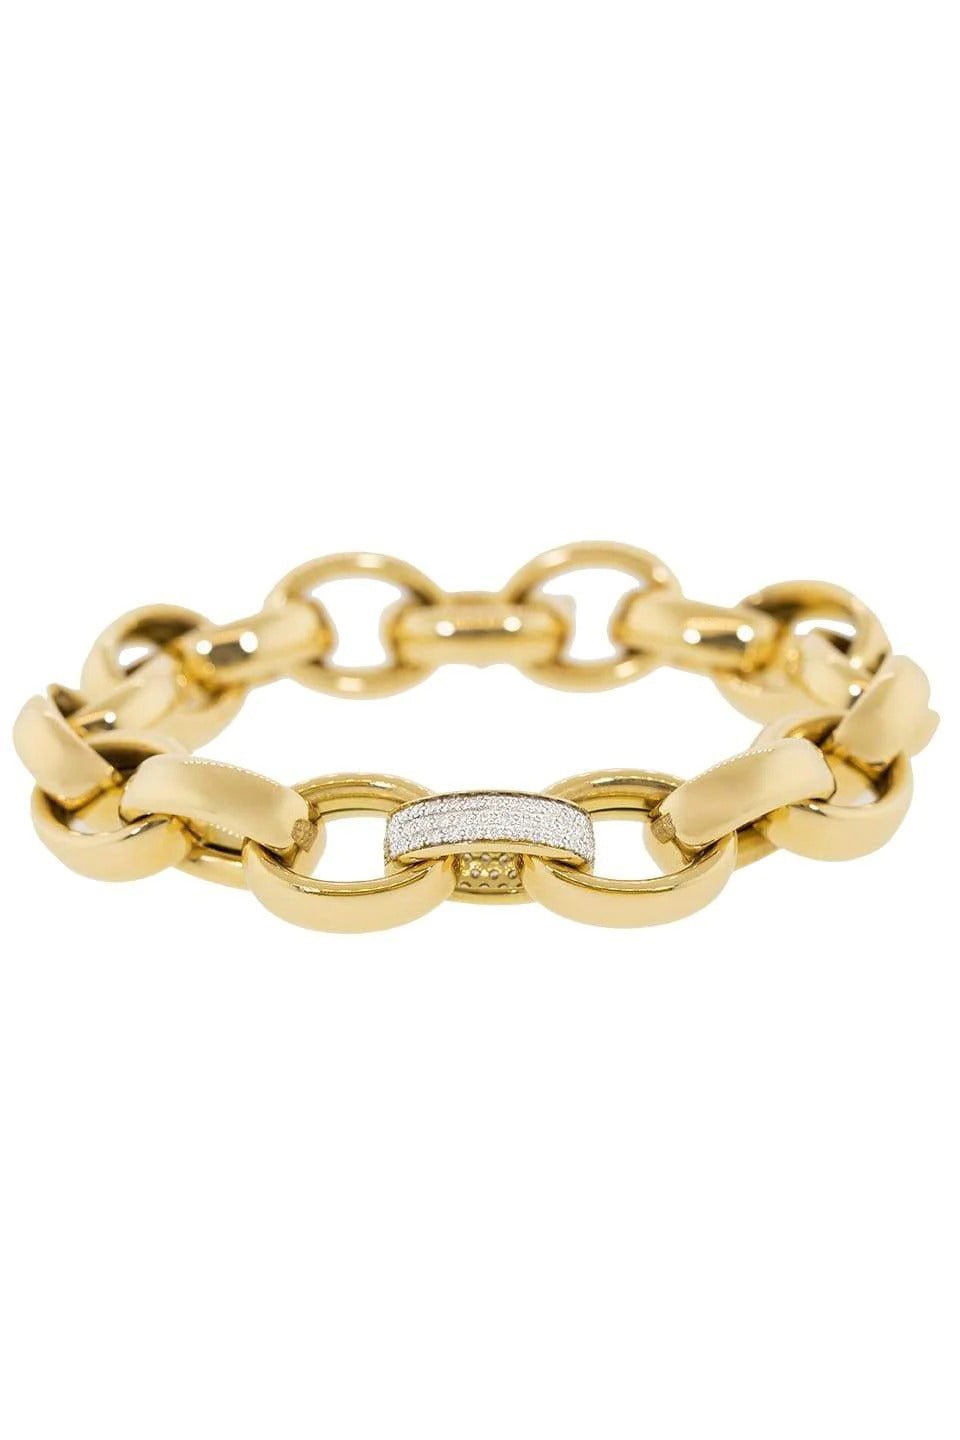 MONICA RICH KOSANN 18kt yellow gold Marylin link bracelet - Black